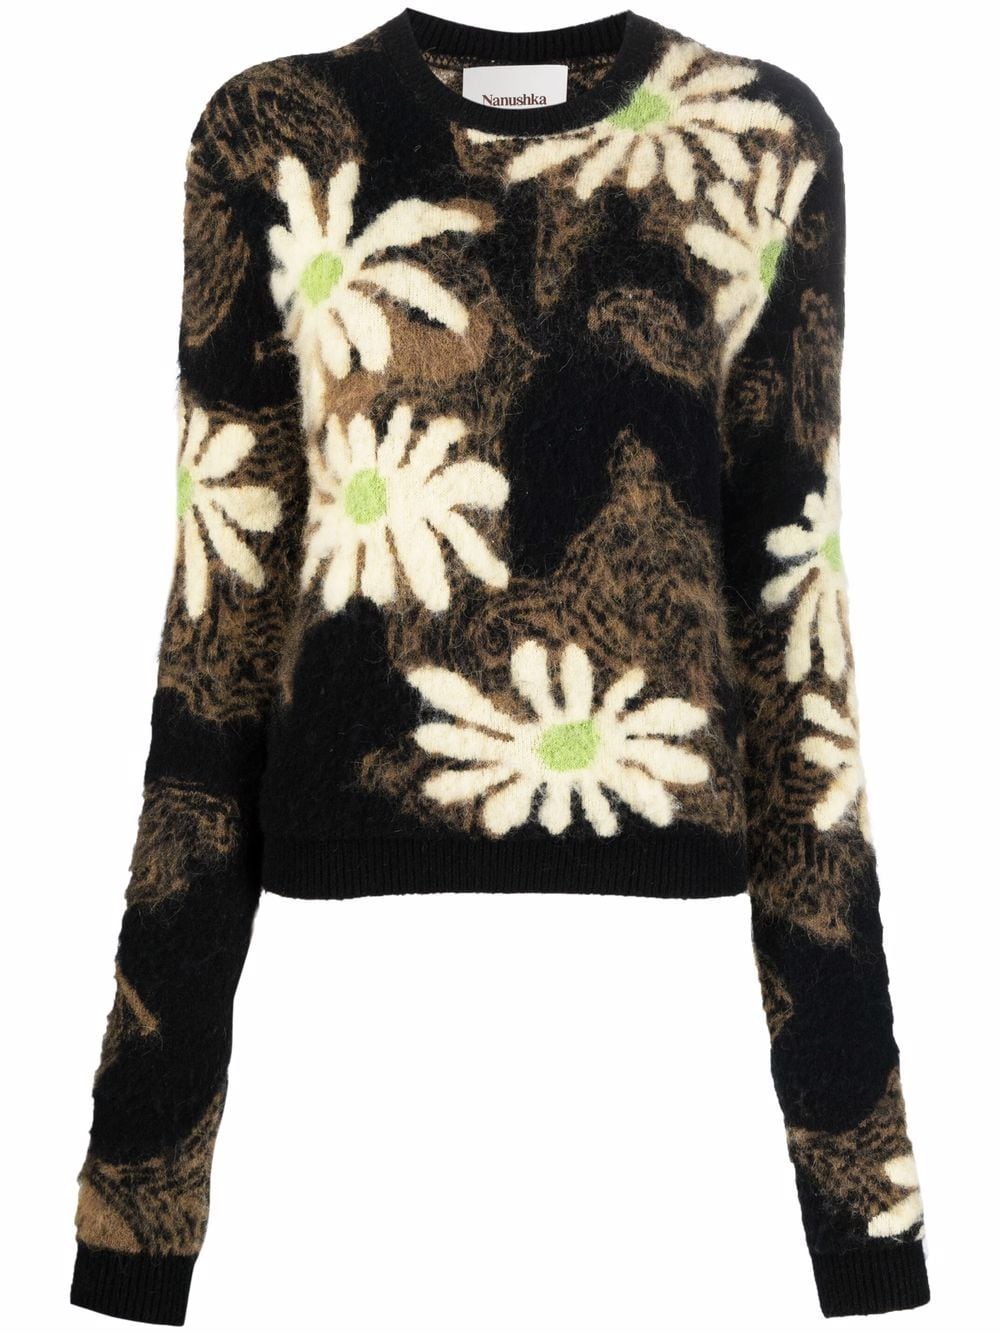 Nanushka floral knit jumper - Black